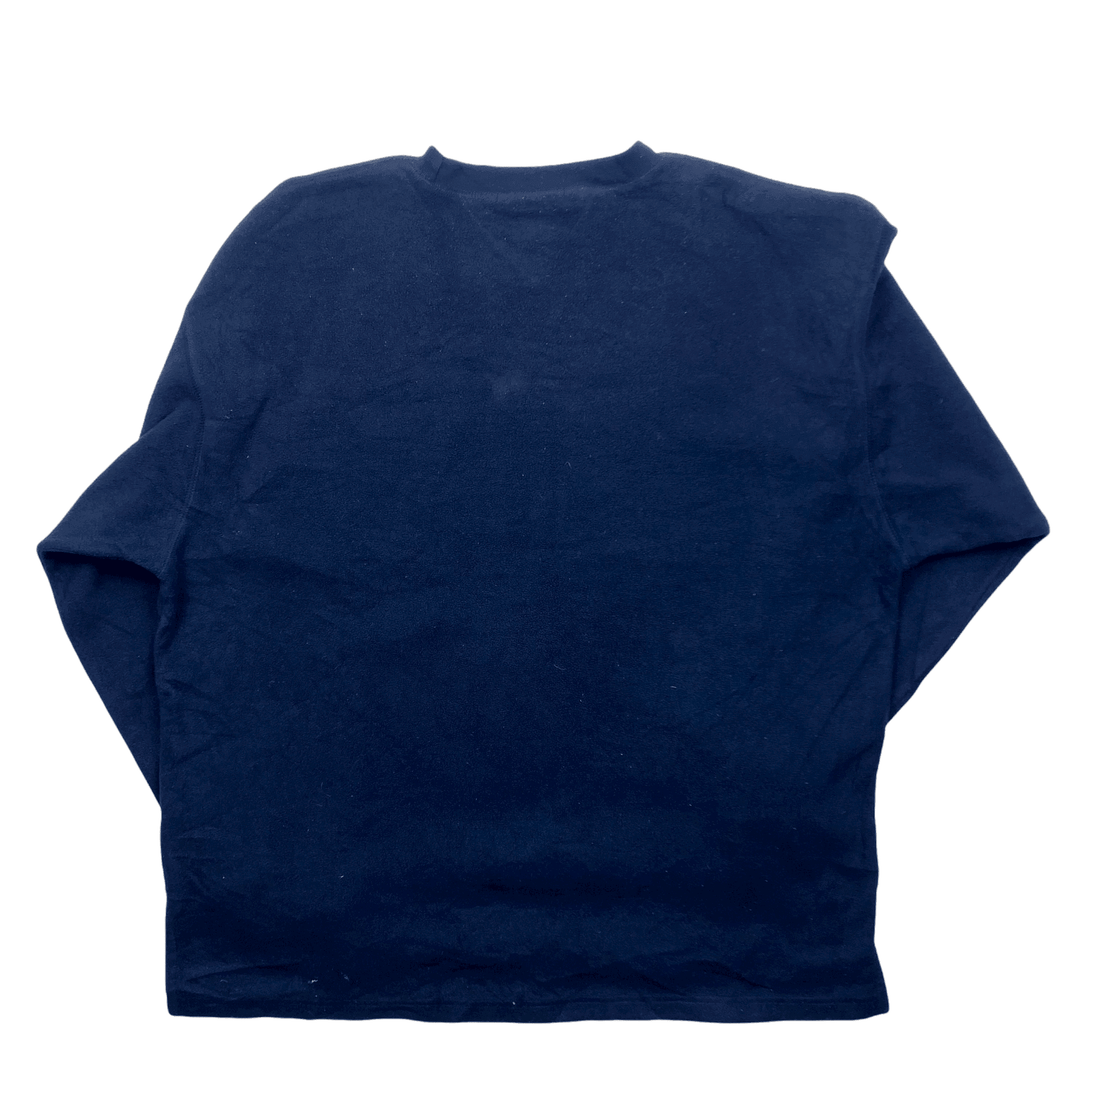 Vintage 90s Navy Blue Tommy Hilfiger Fleece Sweatshirt - Extra Large - The Streetwear Studio